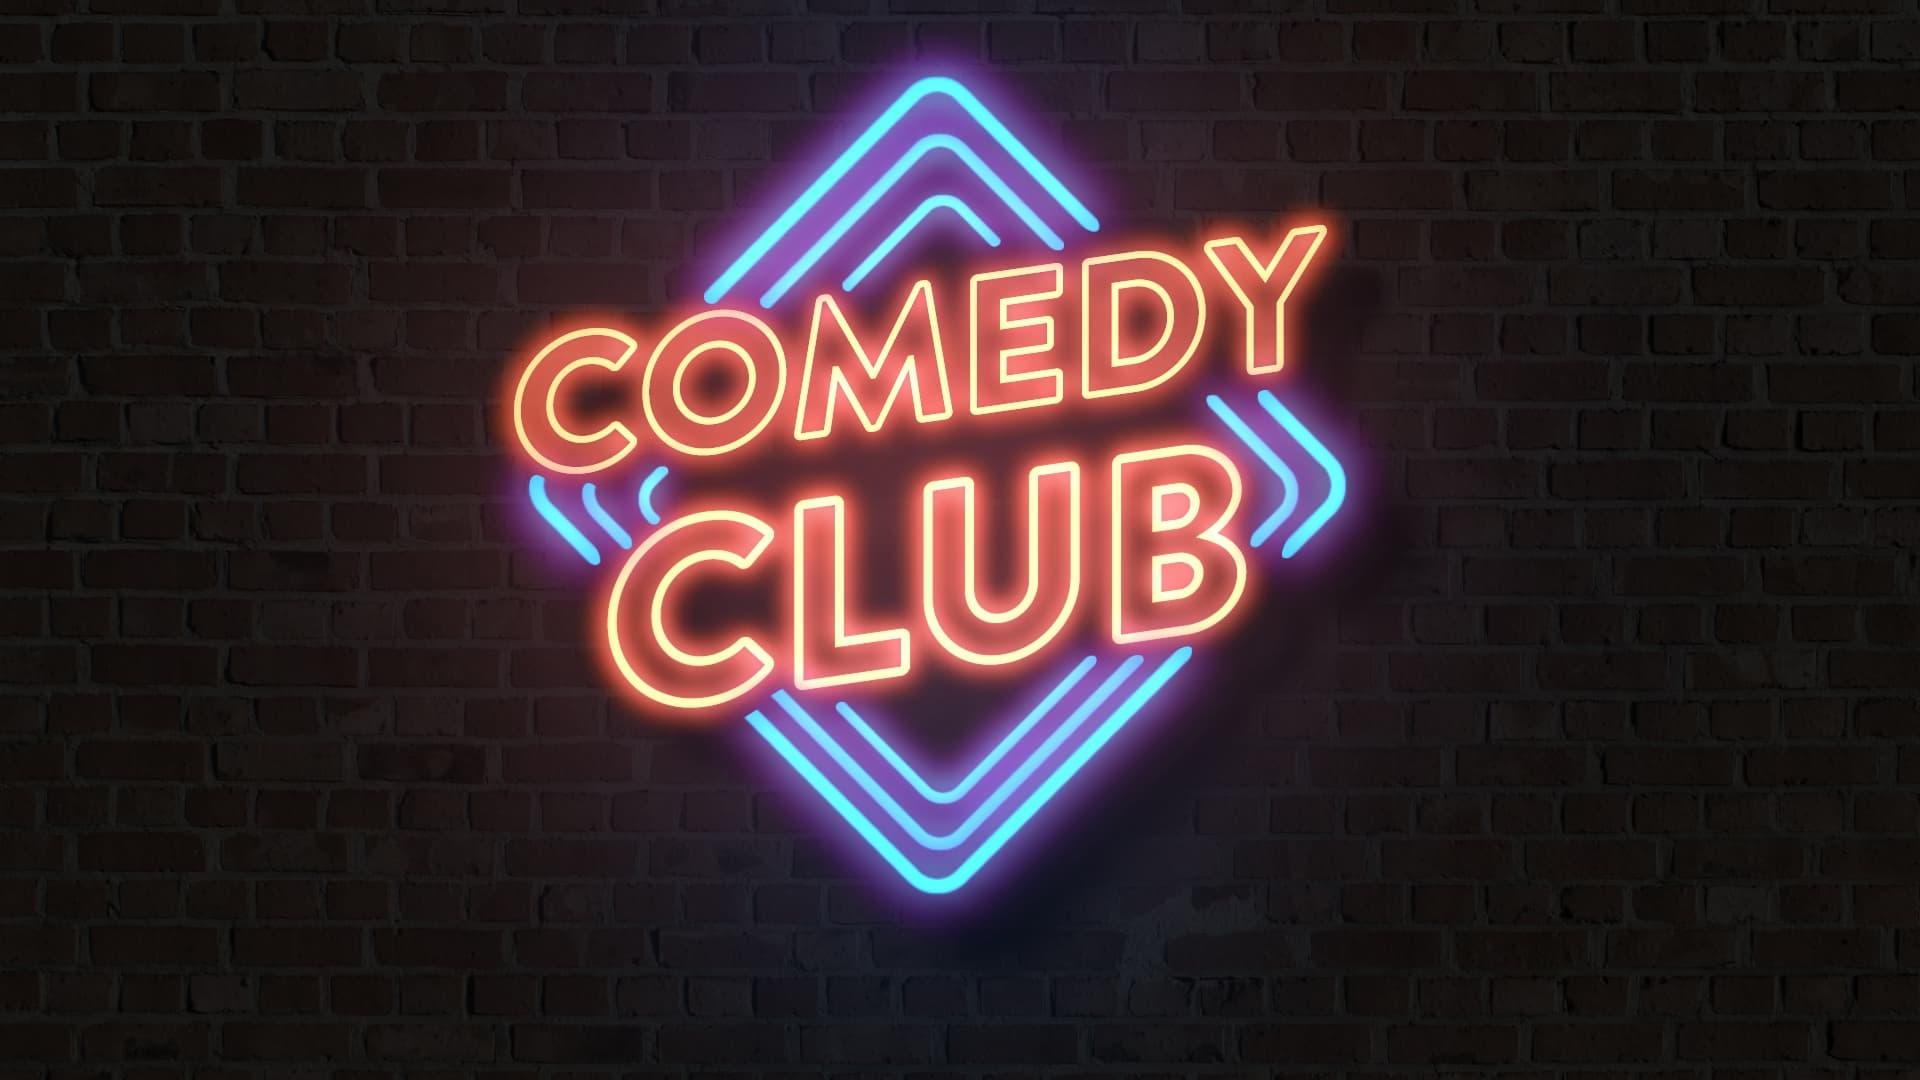 Comedy Club backdrop